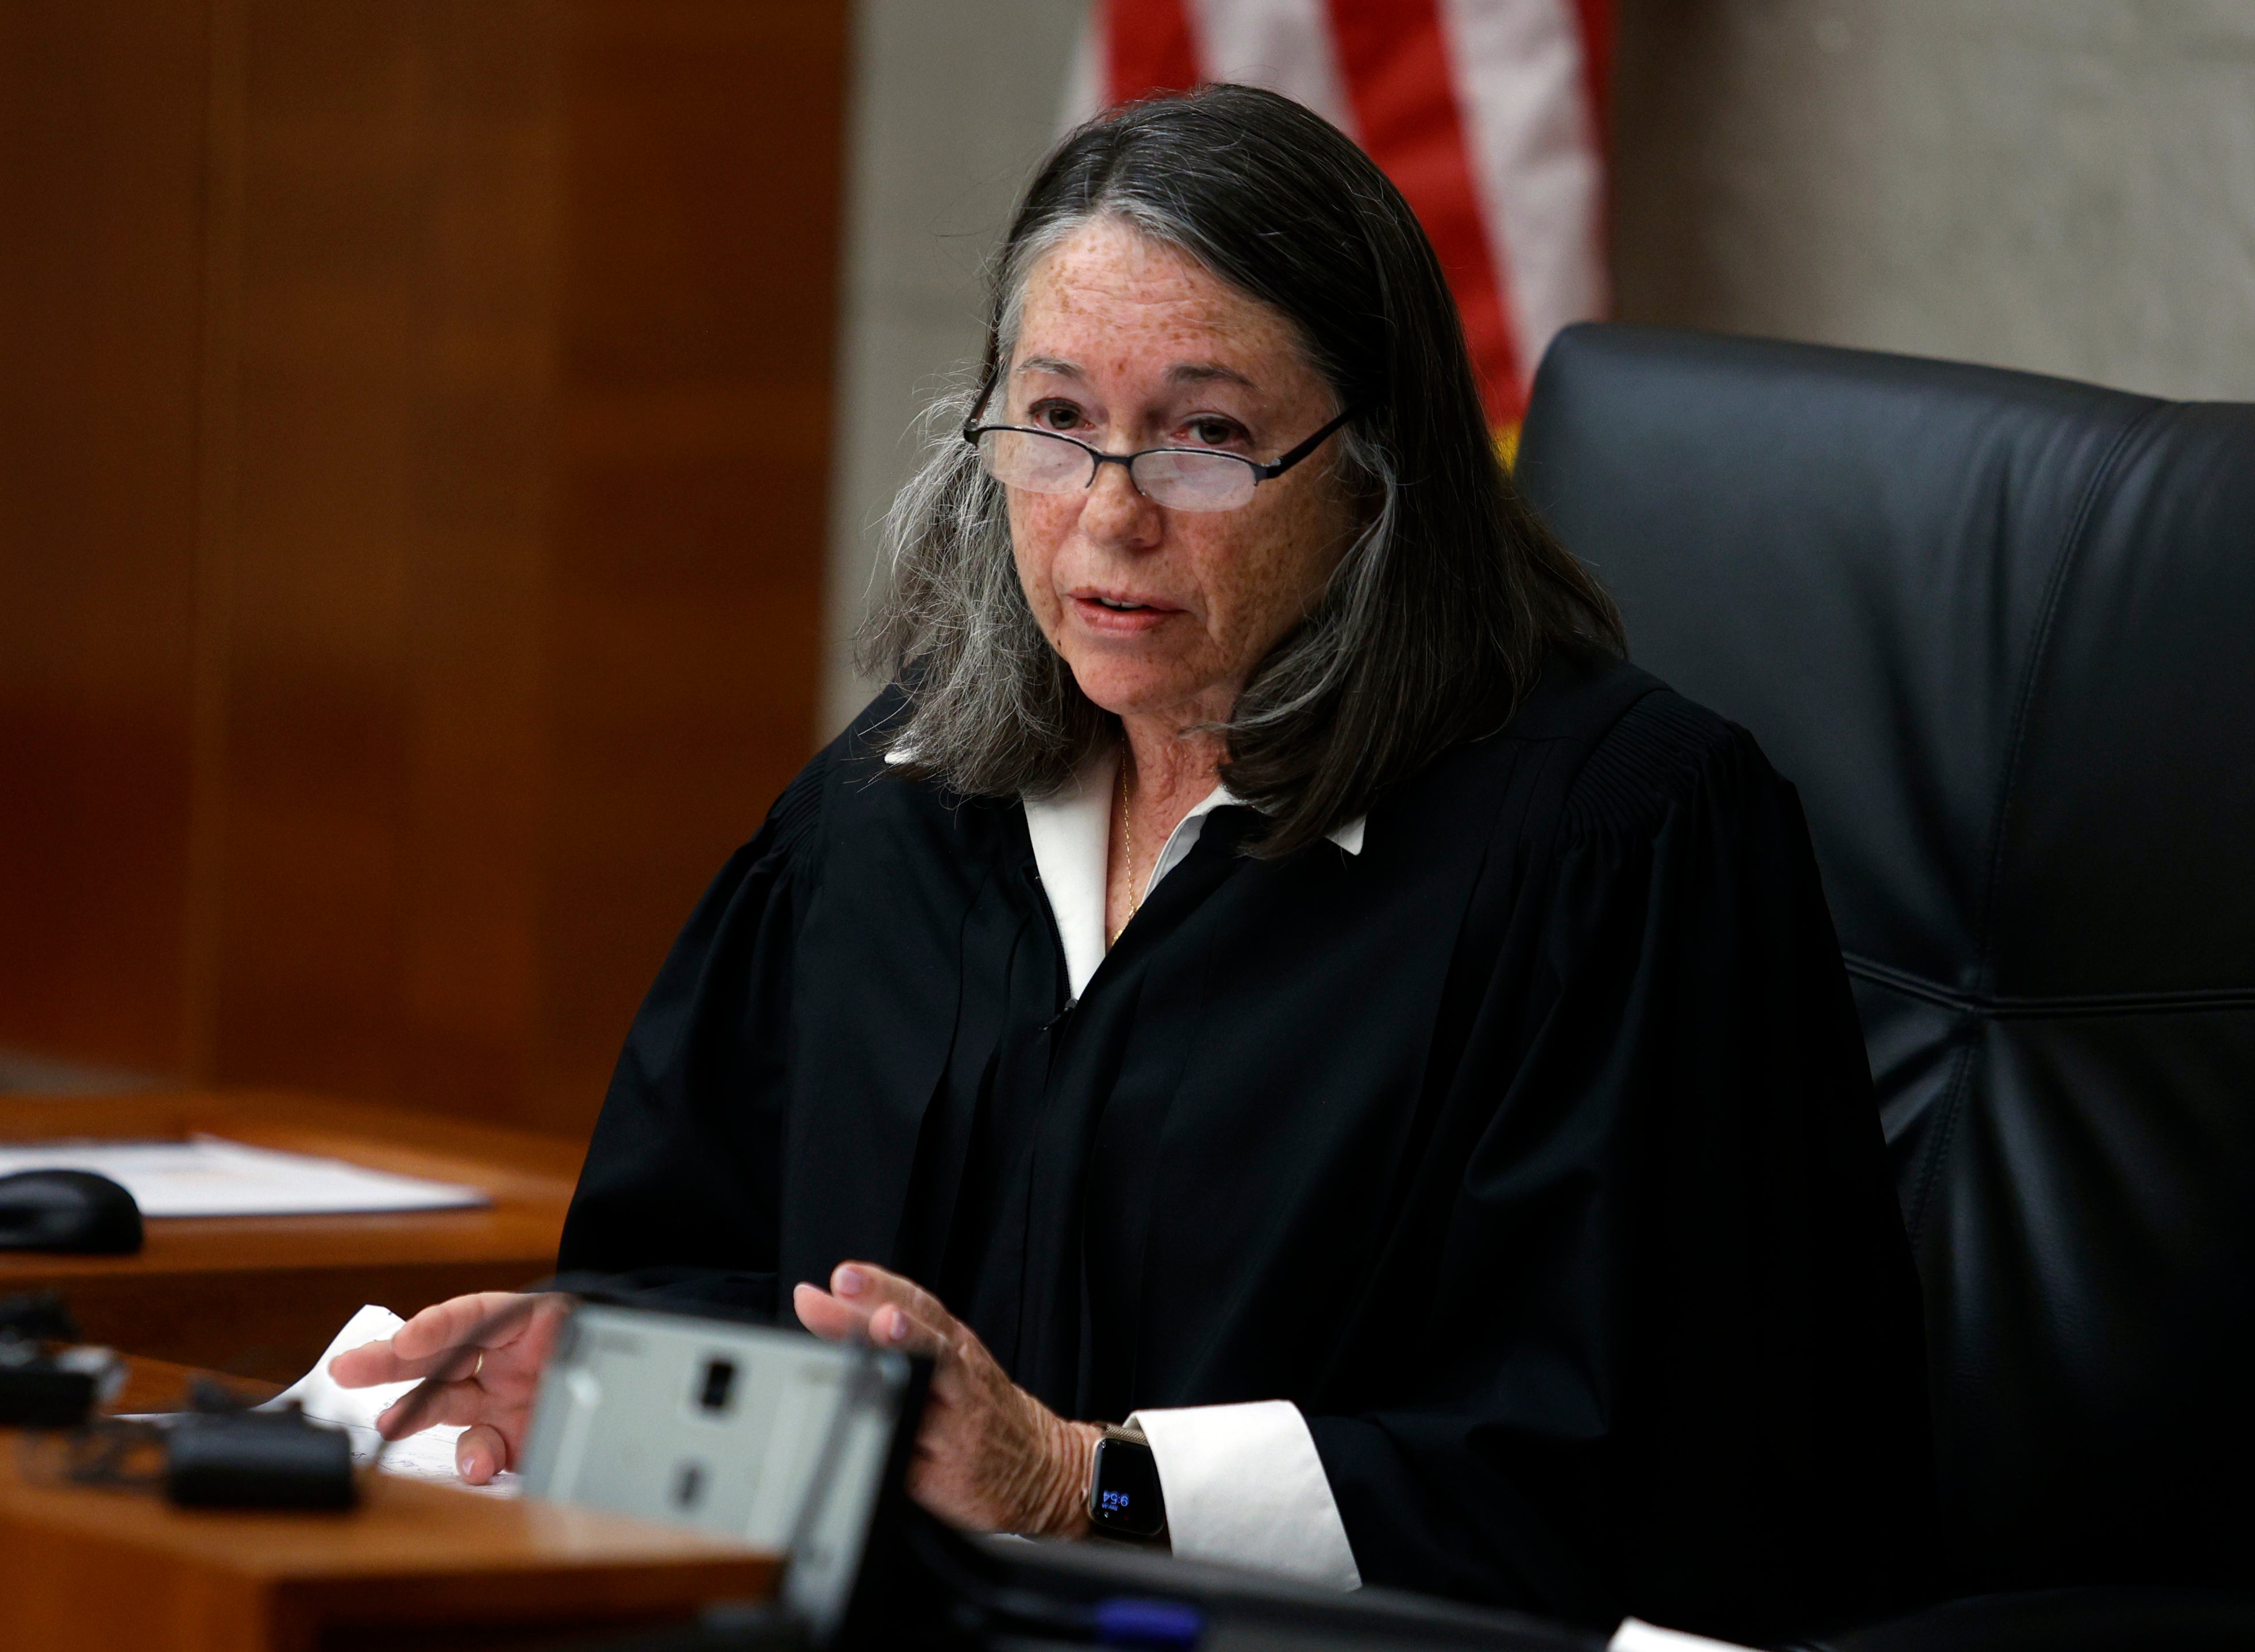 Franklin County Judge Julie Lynch denied bond to Gerson Fuentes